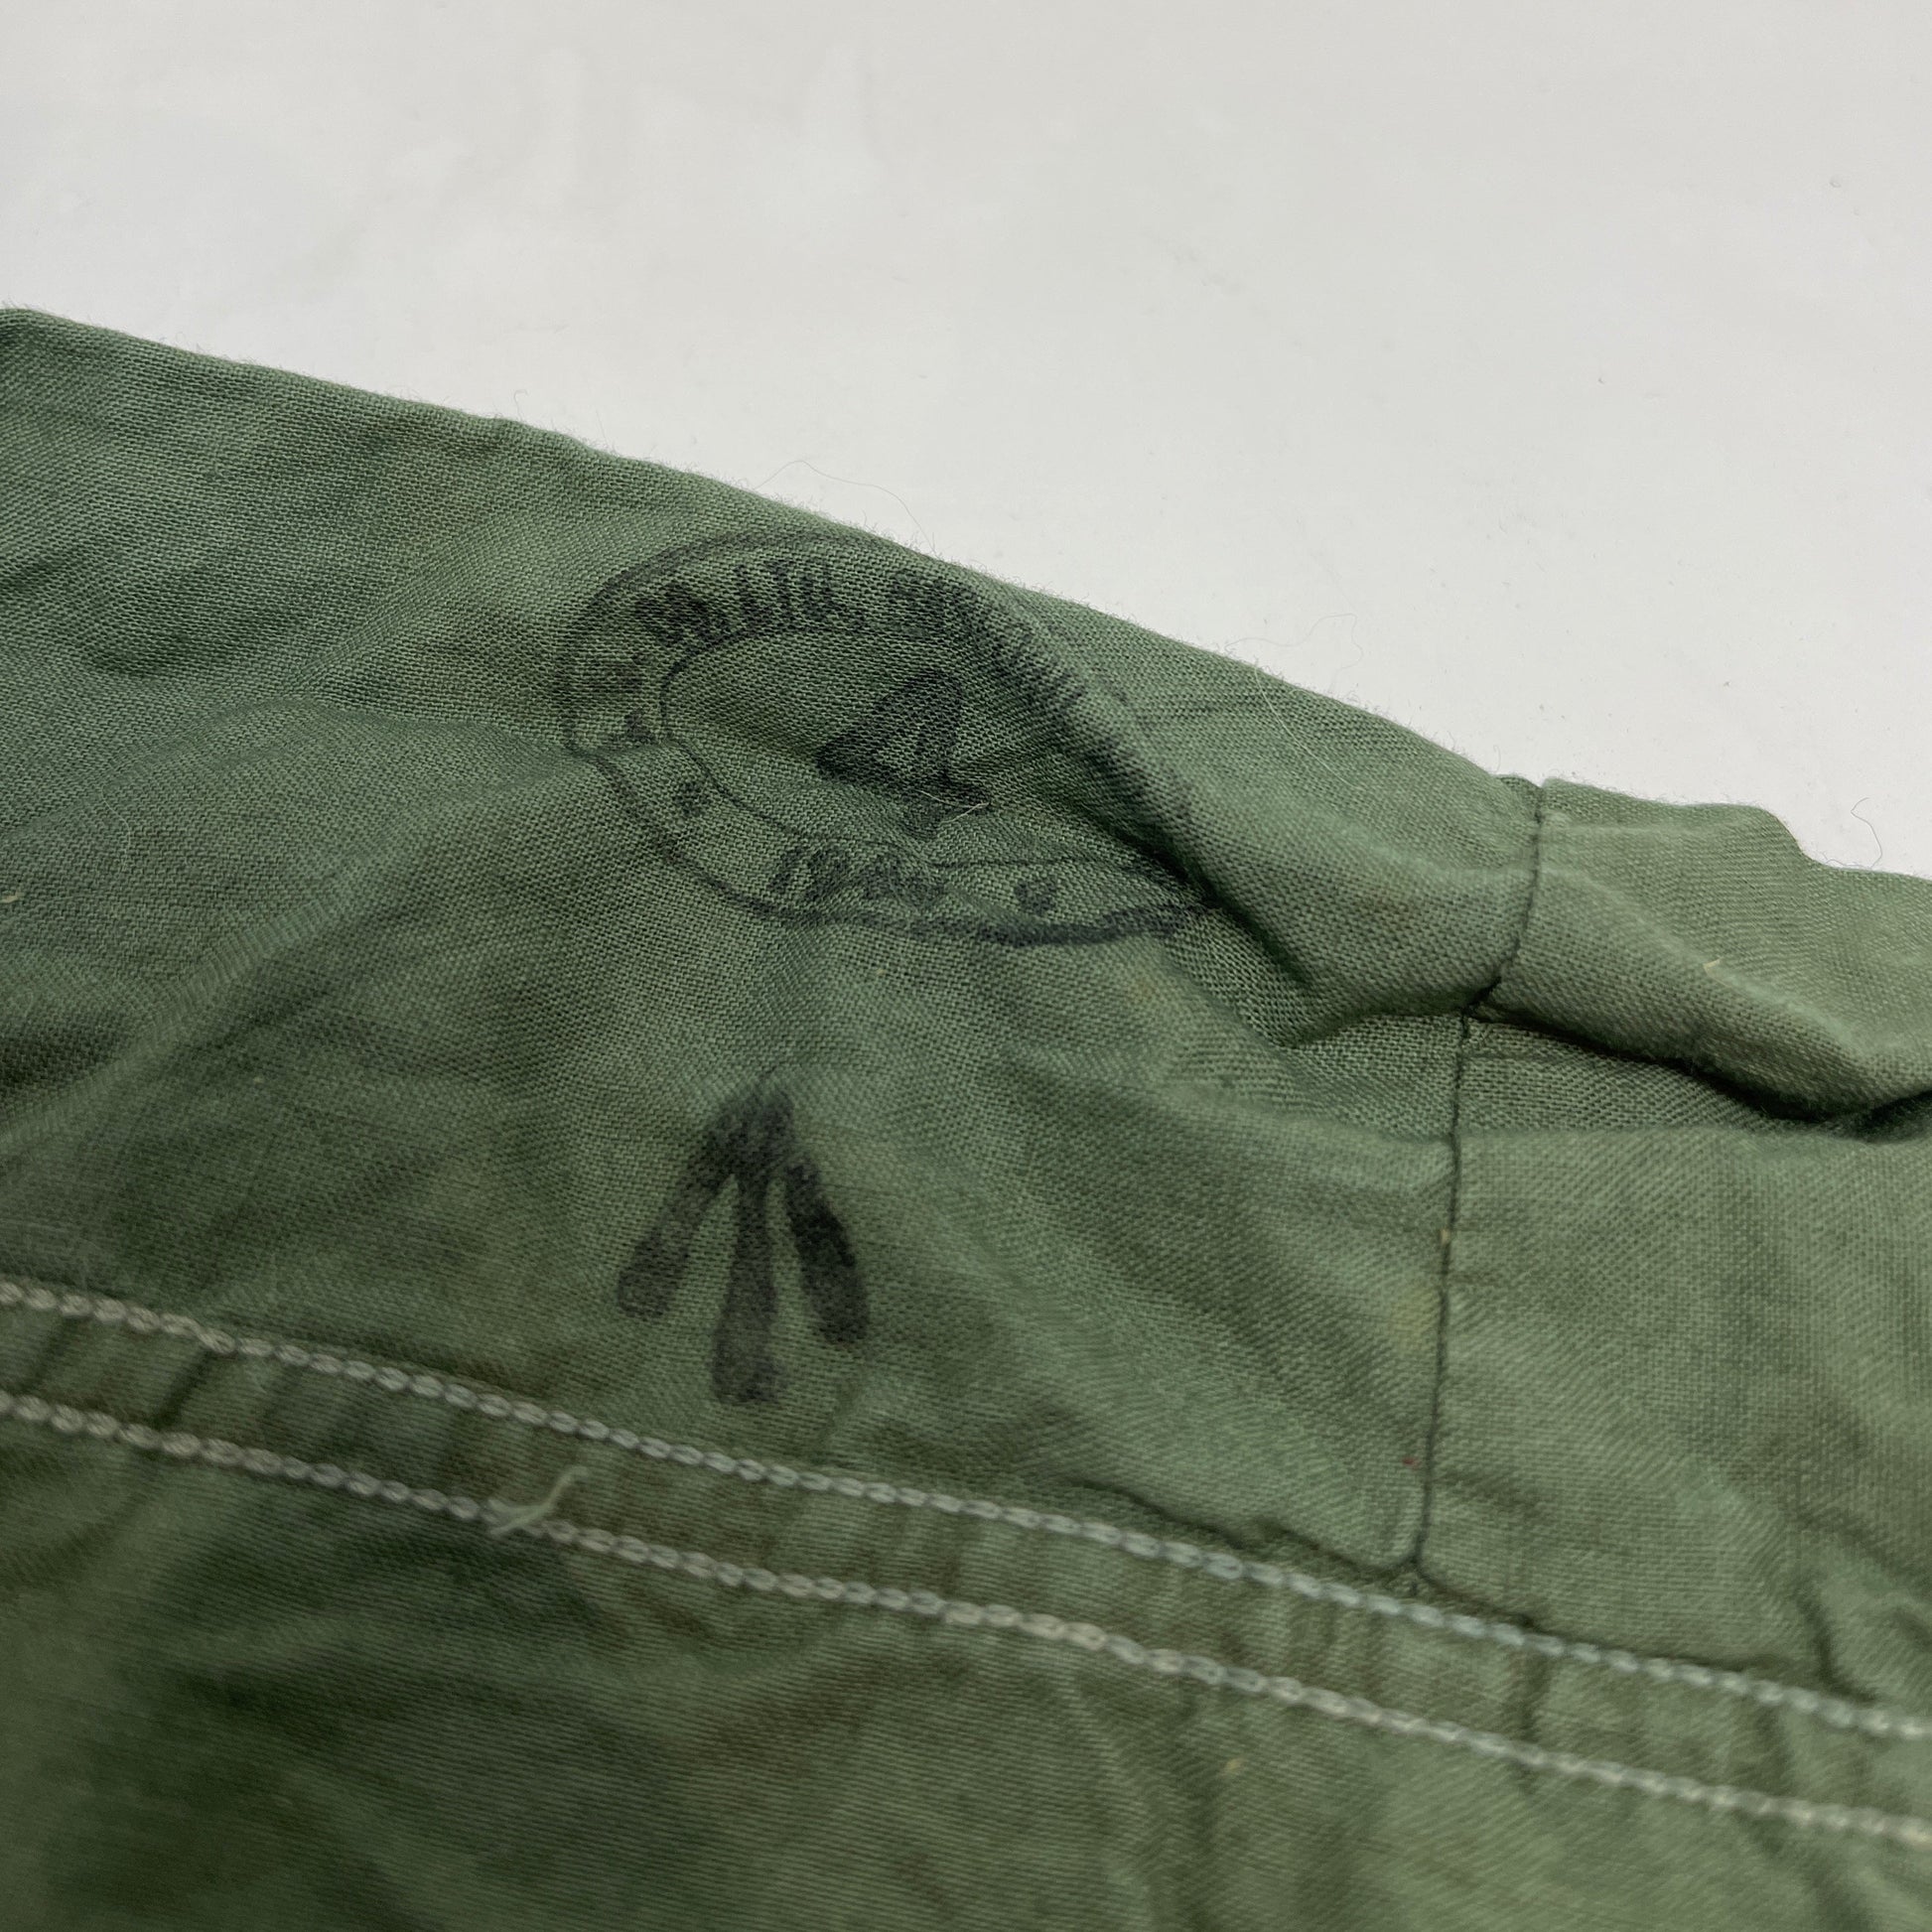 British Green Jungle Shorts 1945 Dated